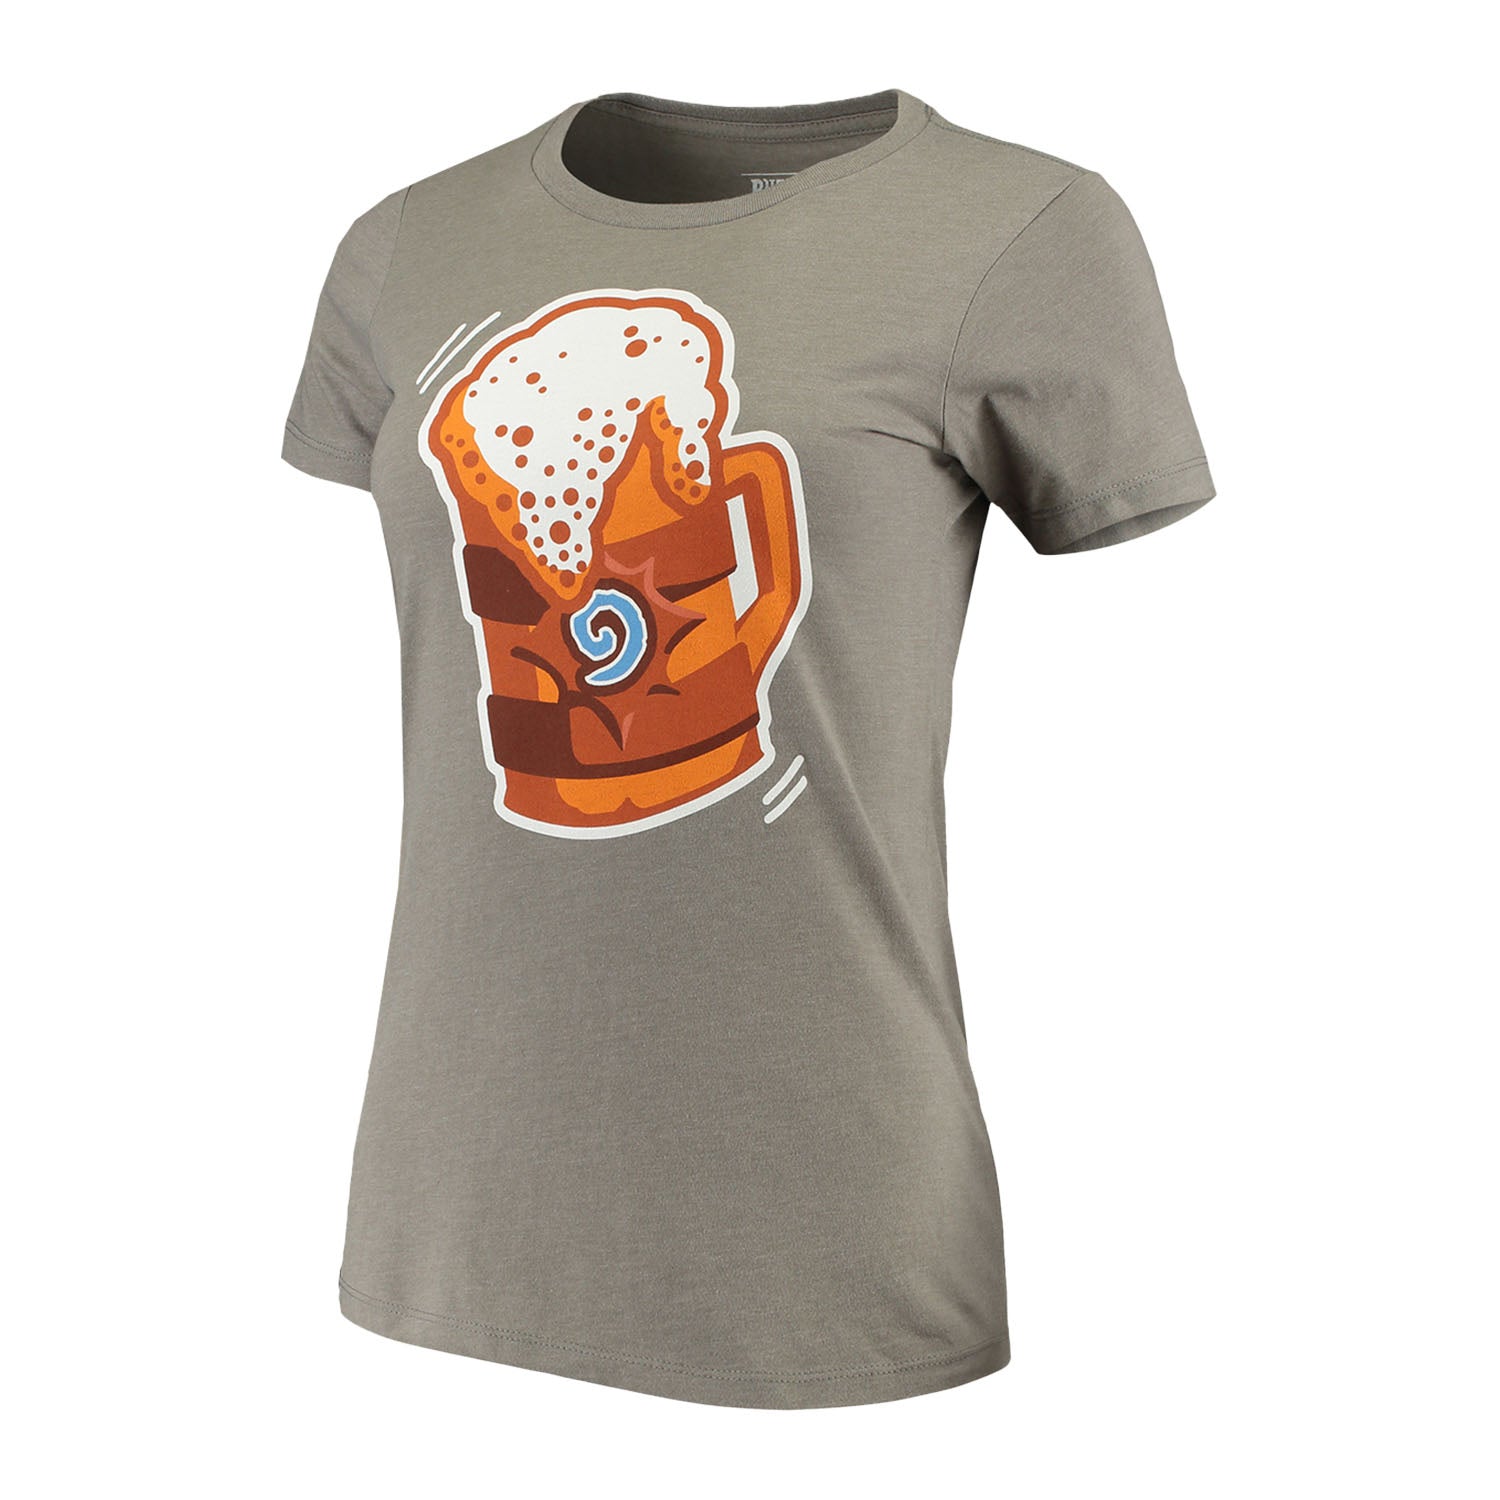 Hearthstone InnKeeper Women's Brown T-Shirt - Front View